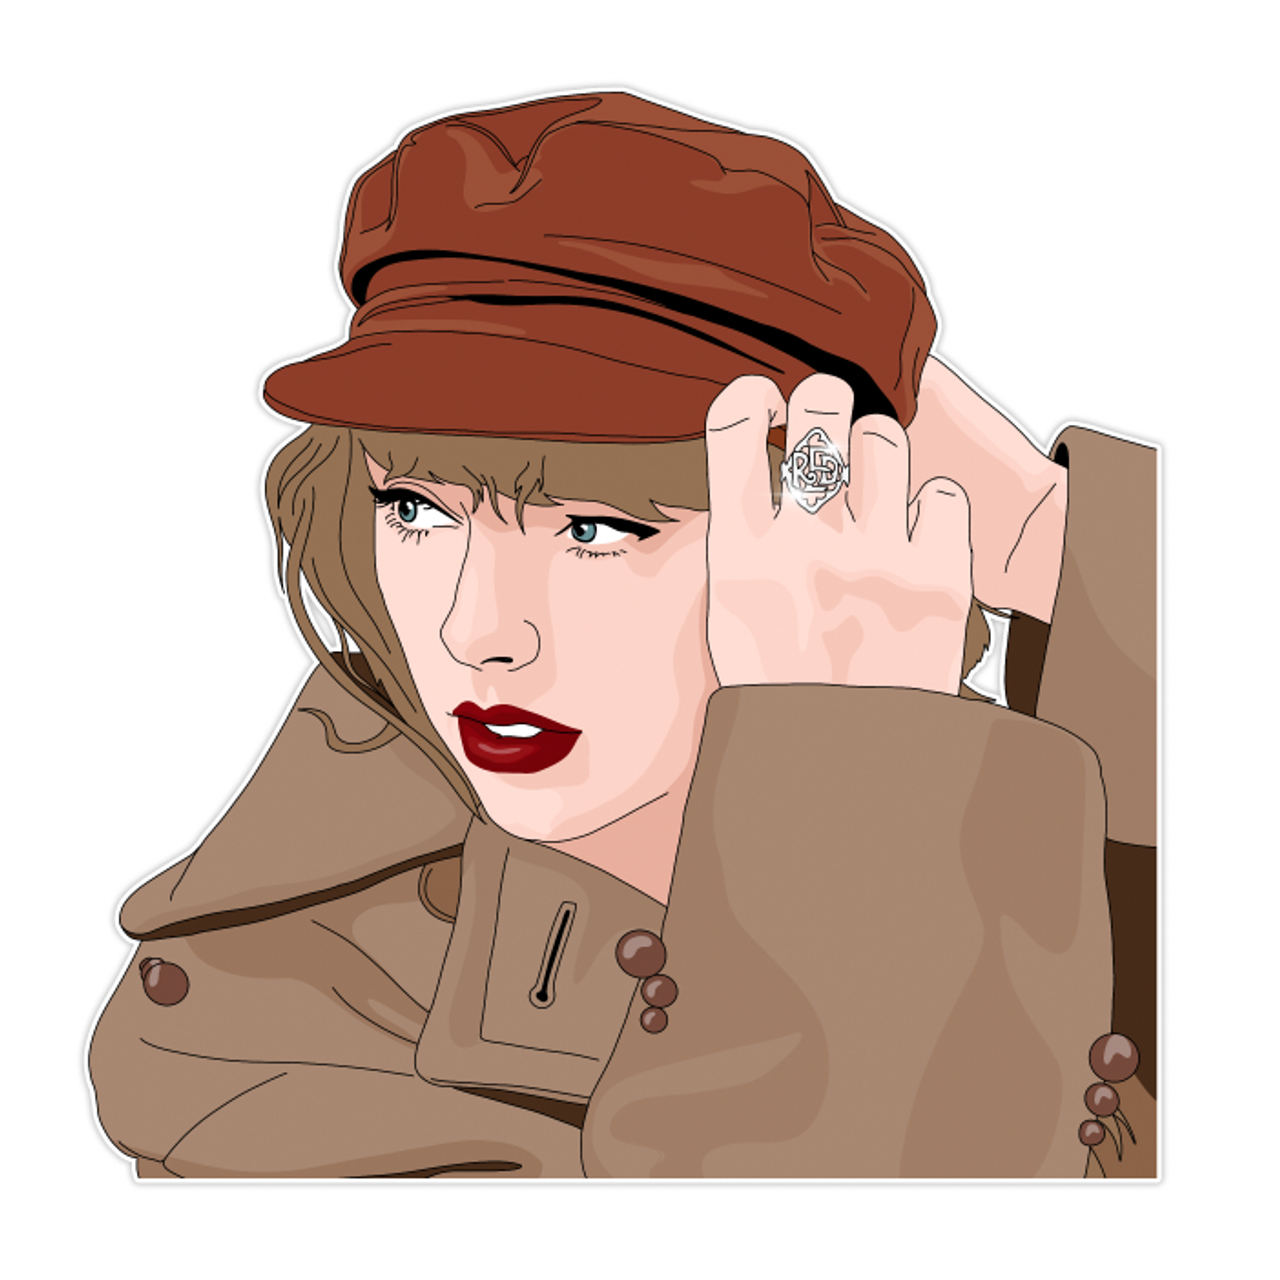 Taylor Swift Sticker Sheet